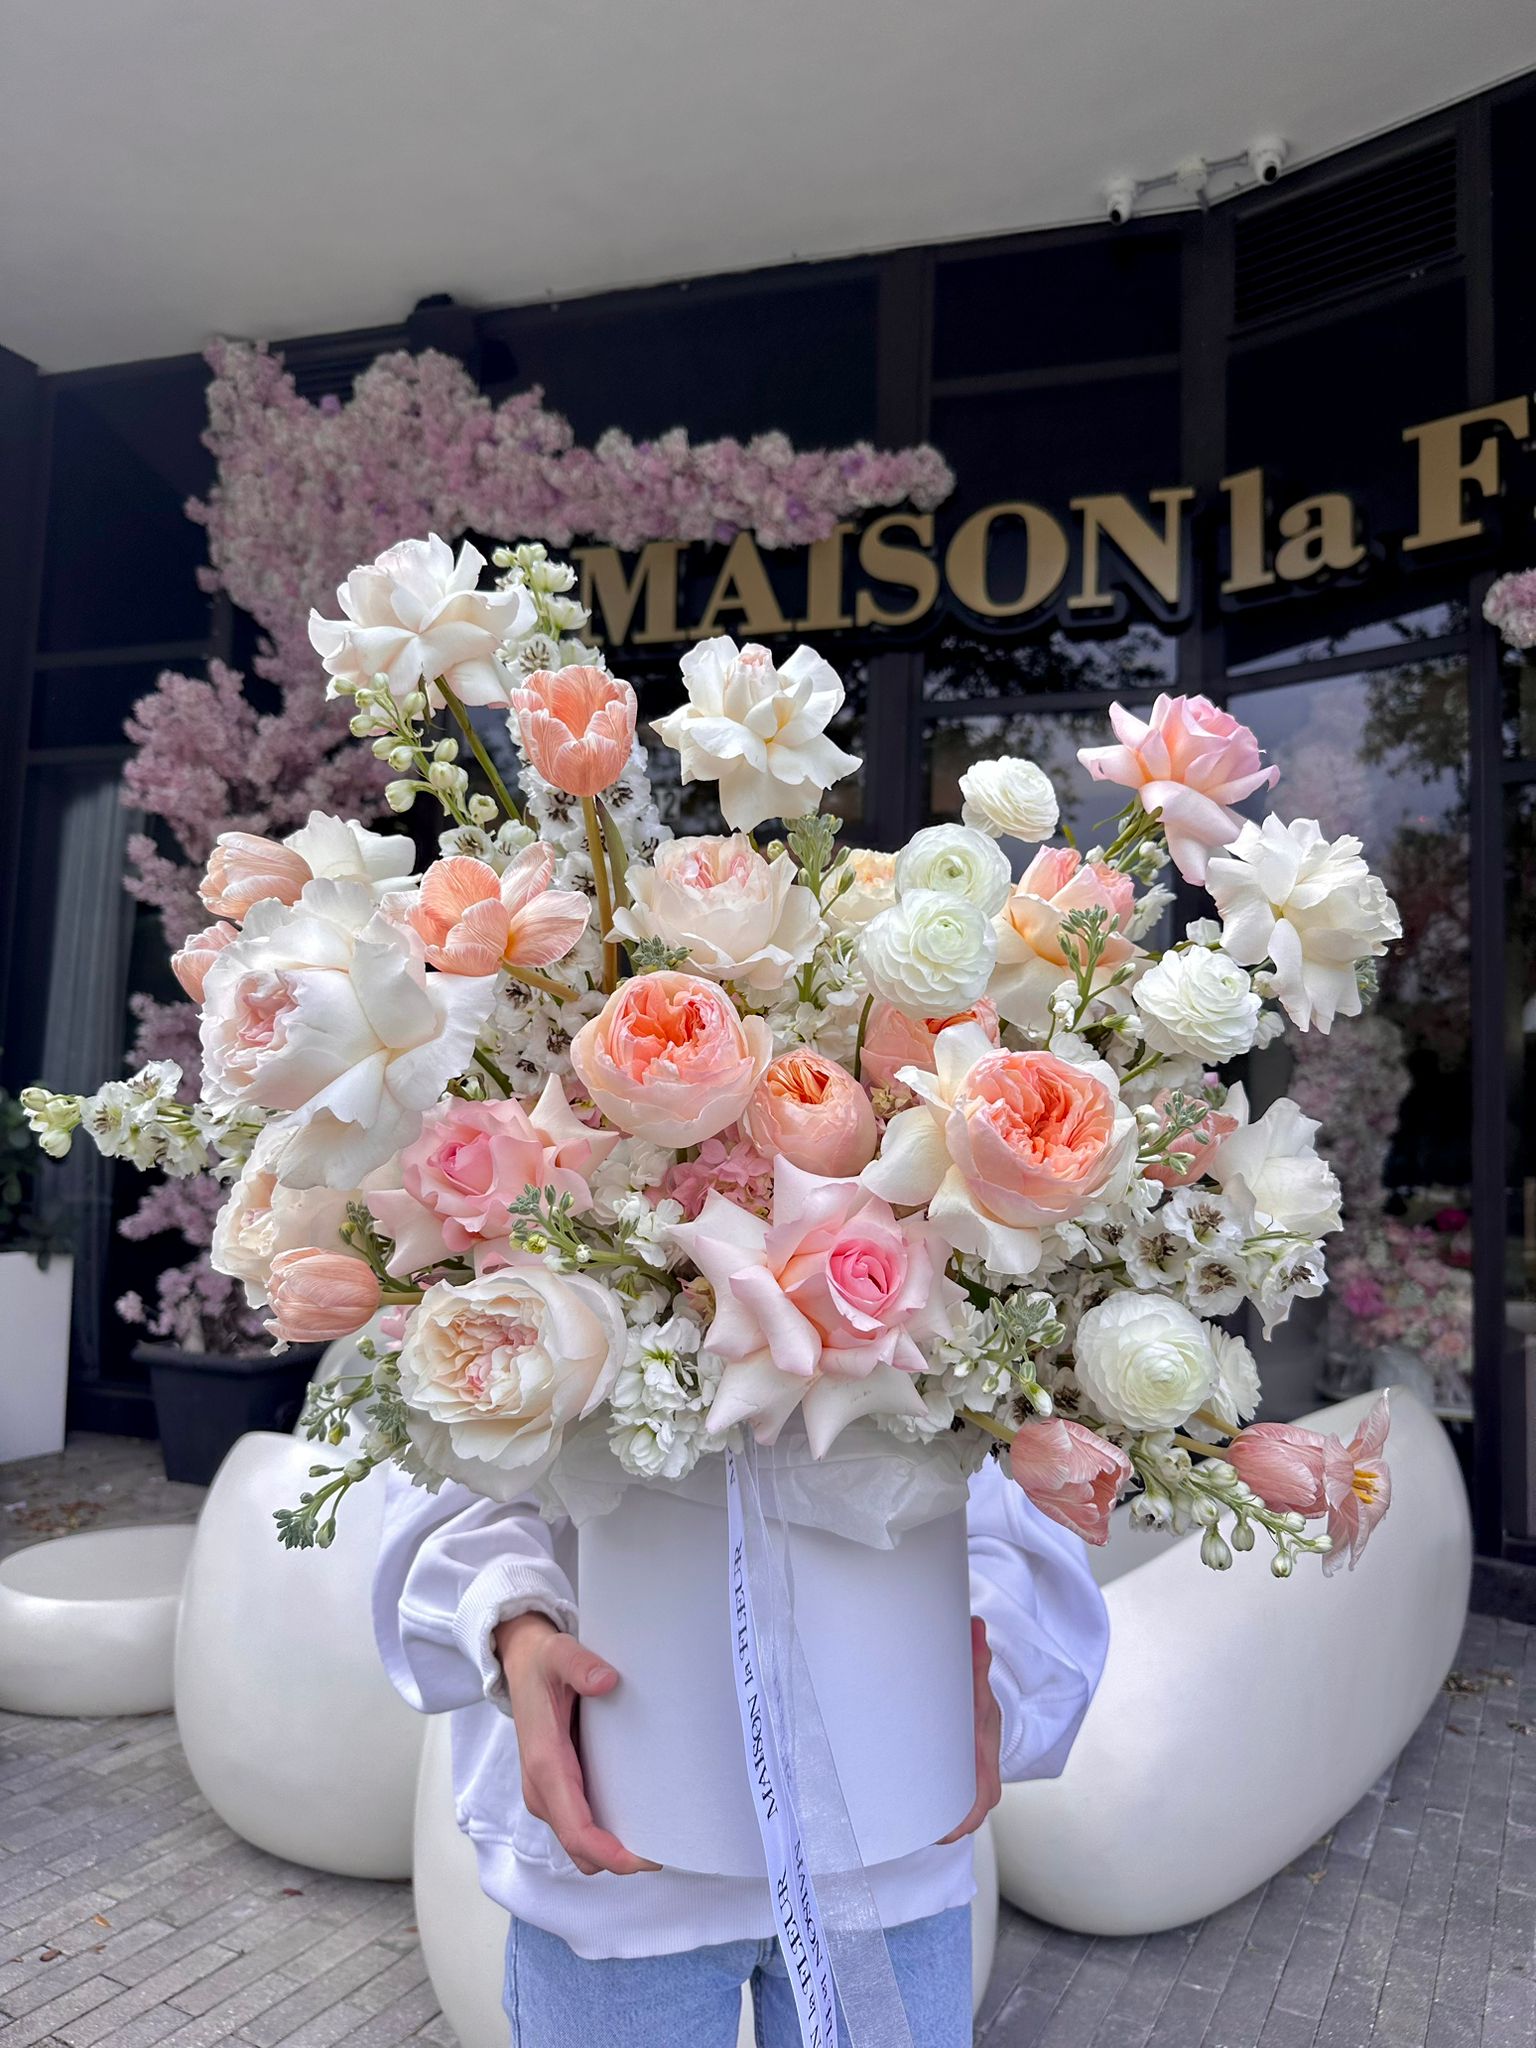 Wedding Bouquet Flowers, Intricate kiss - Beautiful David Austen garden roses, Dutch delphinium, stock, Dutch tulips , ranunculus